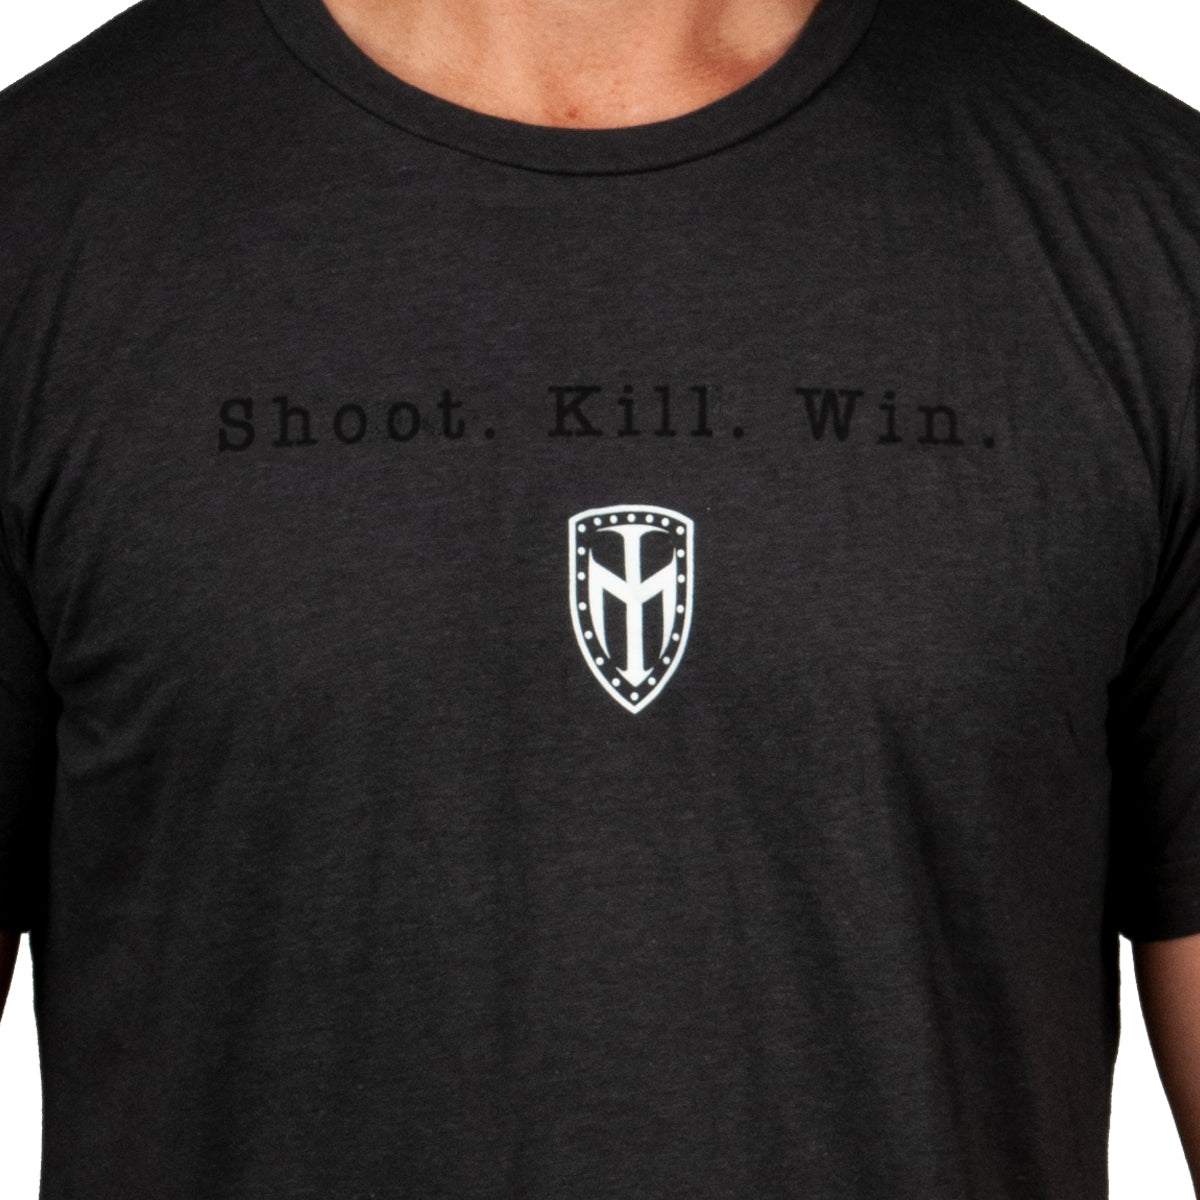 Ironmen Shoot.Kill.Win Shirt - Charcoal